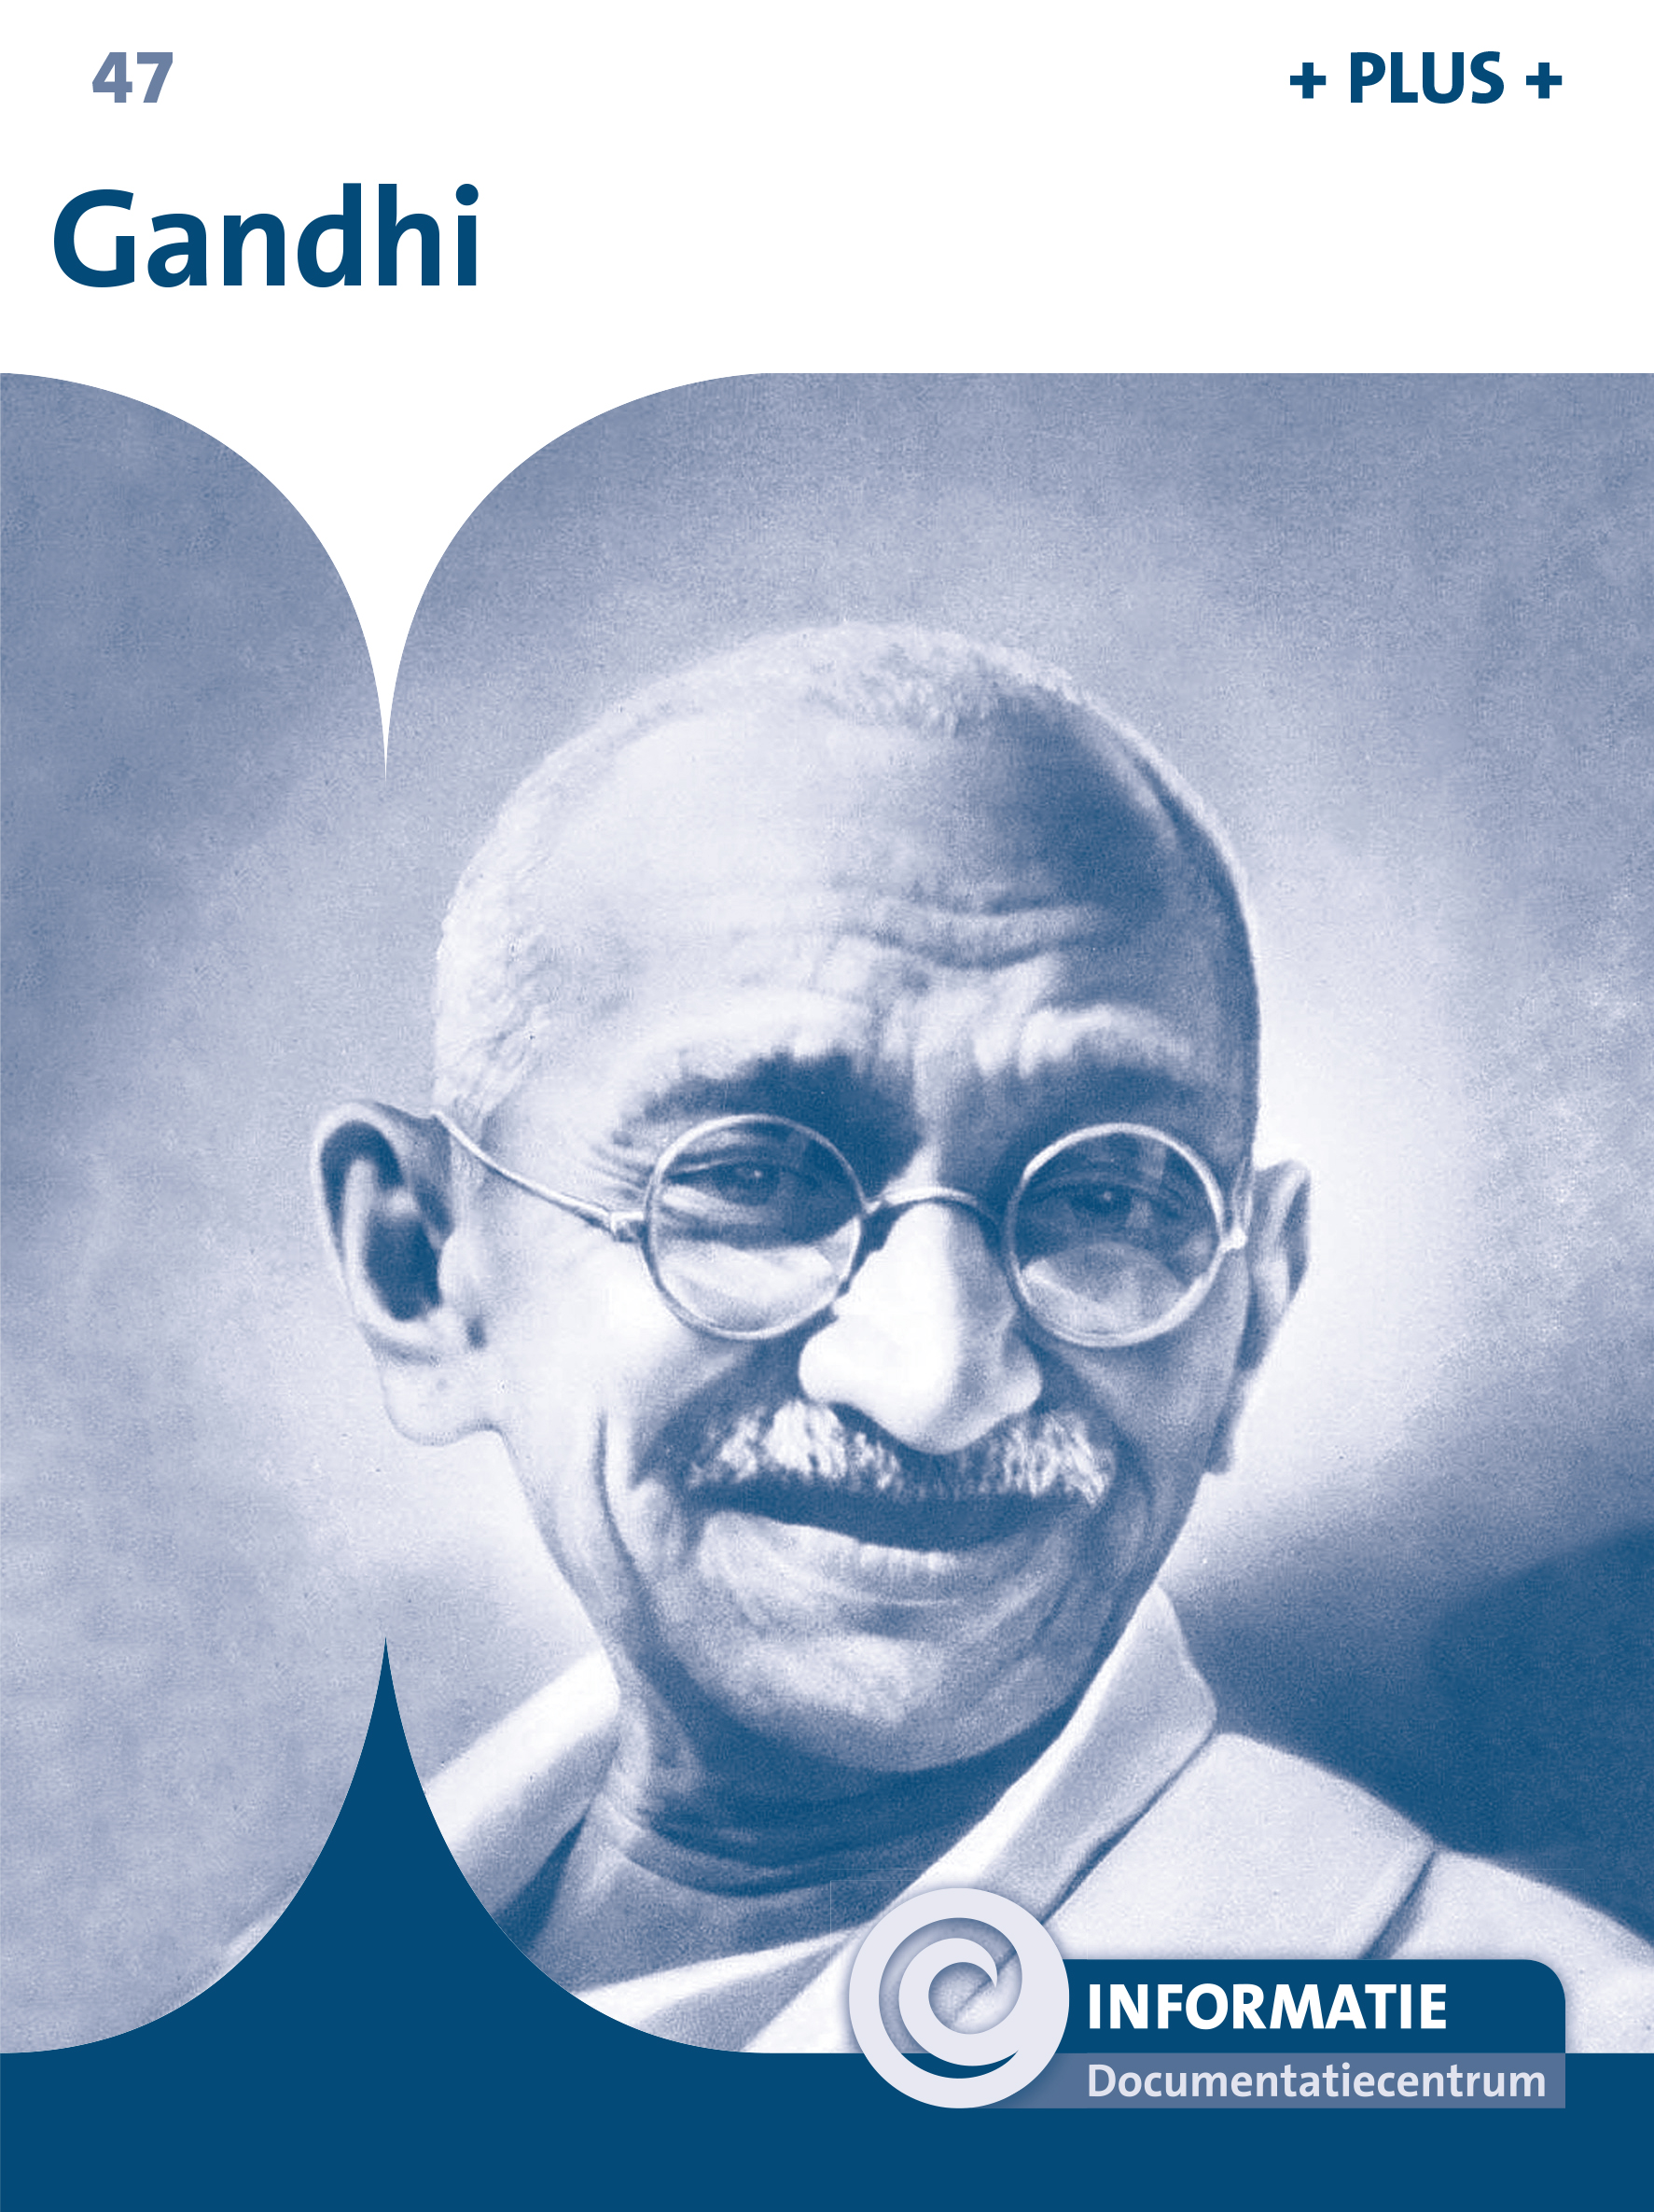 DNKINF047 Gandhi (plusboekje)